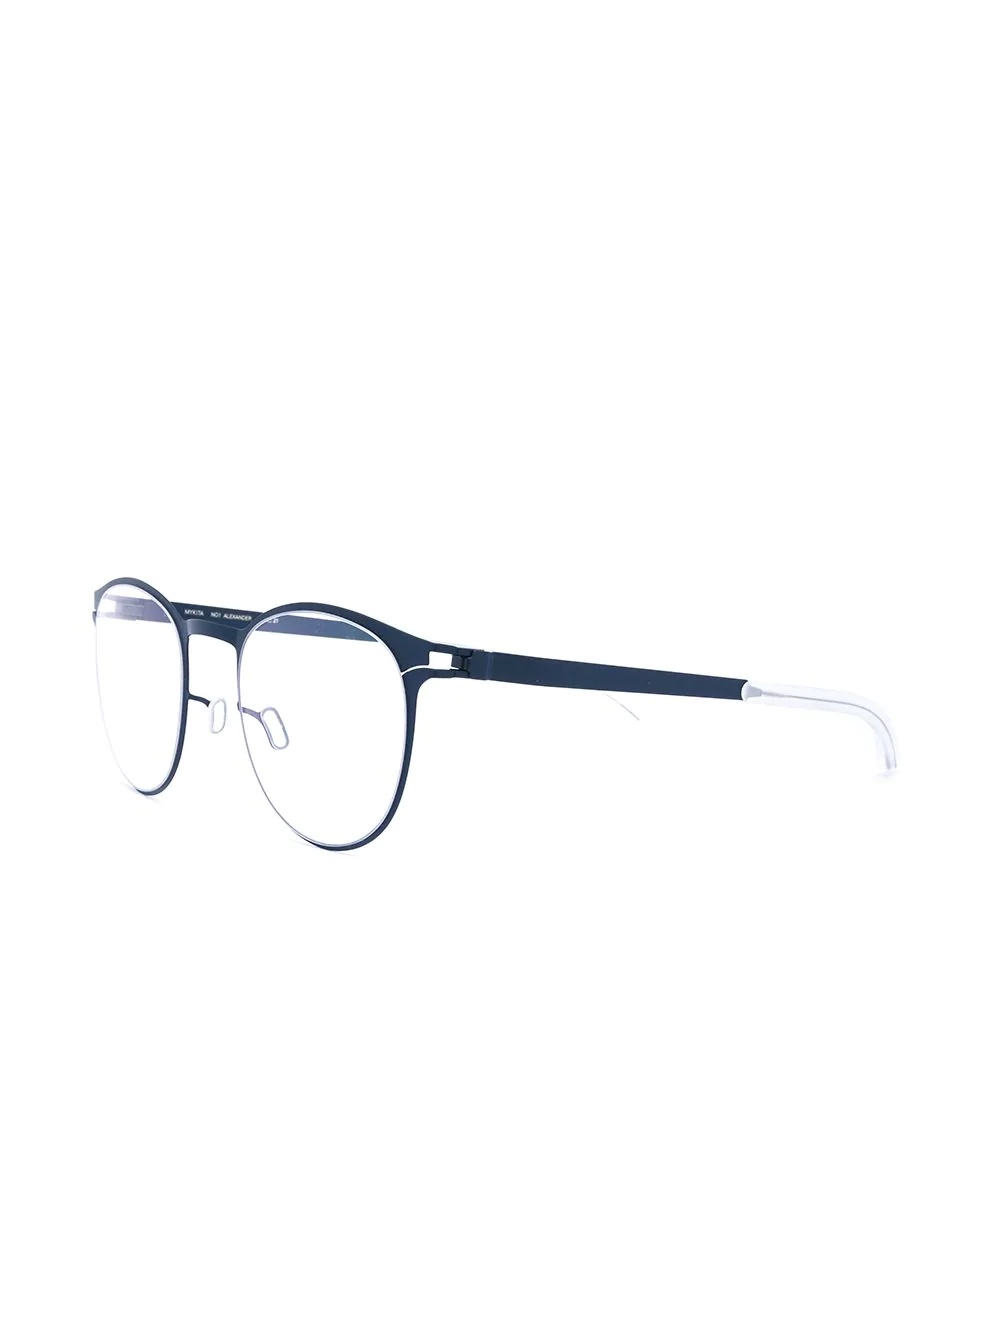 Alexander glasses - 2